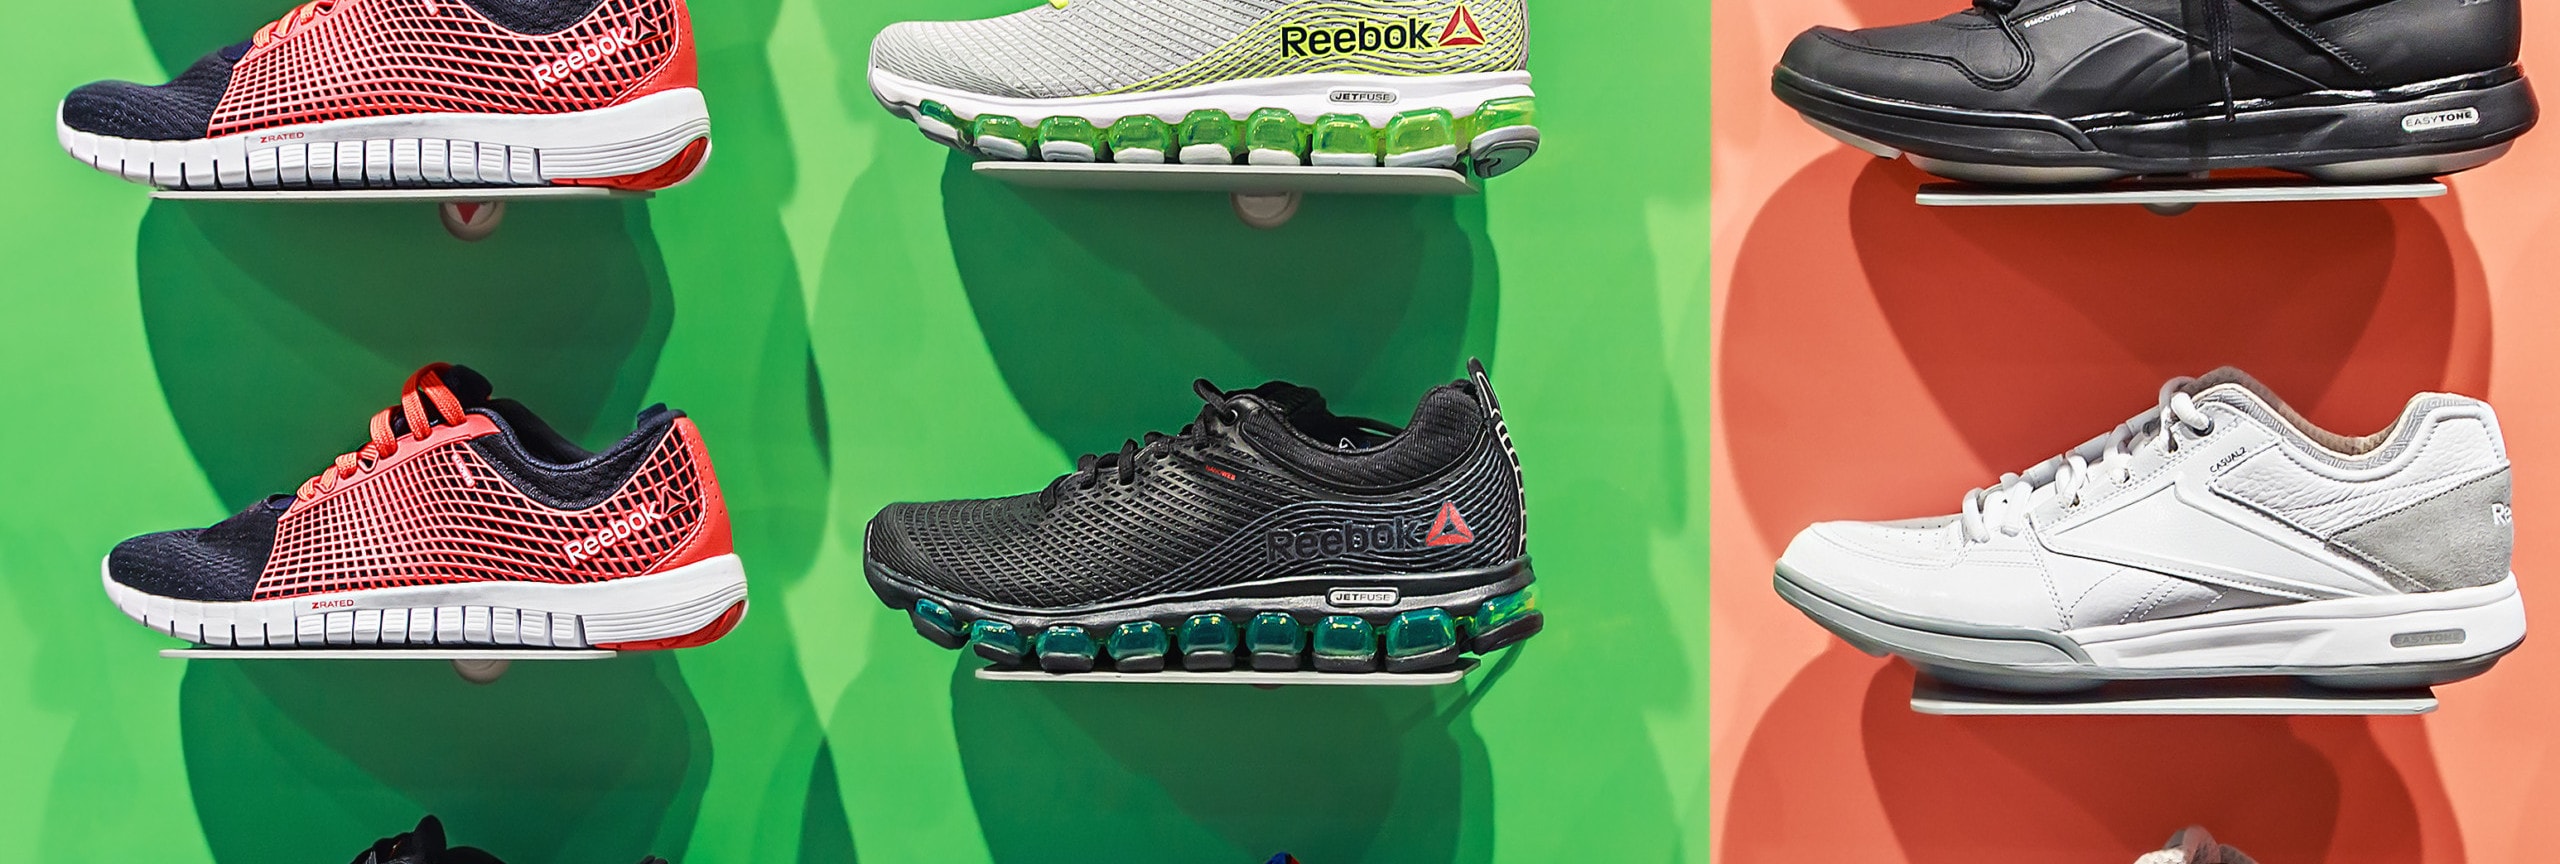 Adidas Acquires Reebok, Closes Gap on | Finance